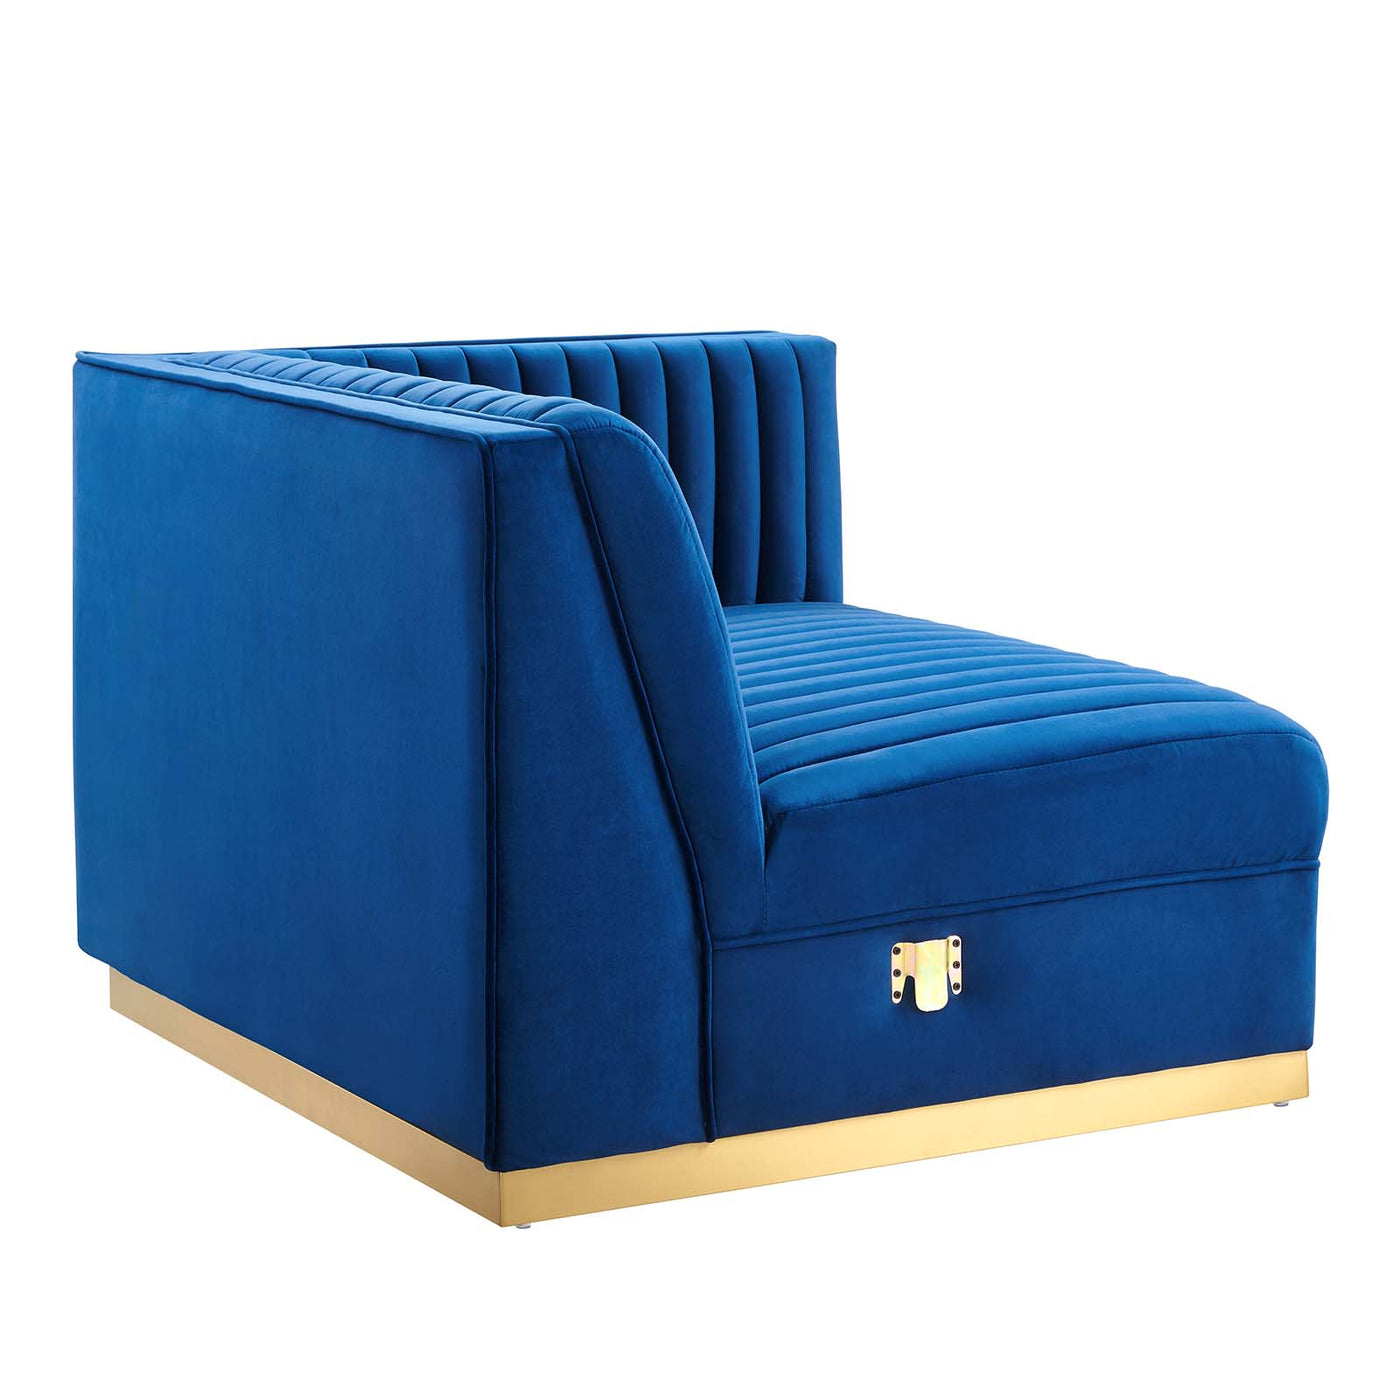 Sanguine Channel Tufted Performance Velvet Modular Sectional Sofa Right-Arm Chair